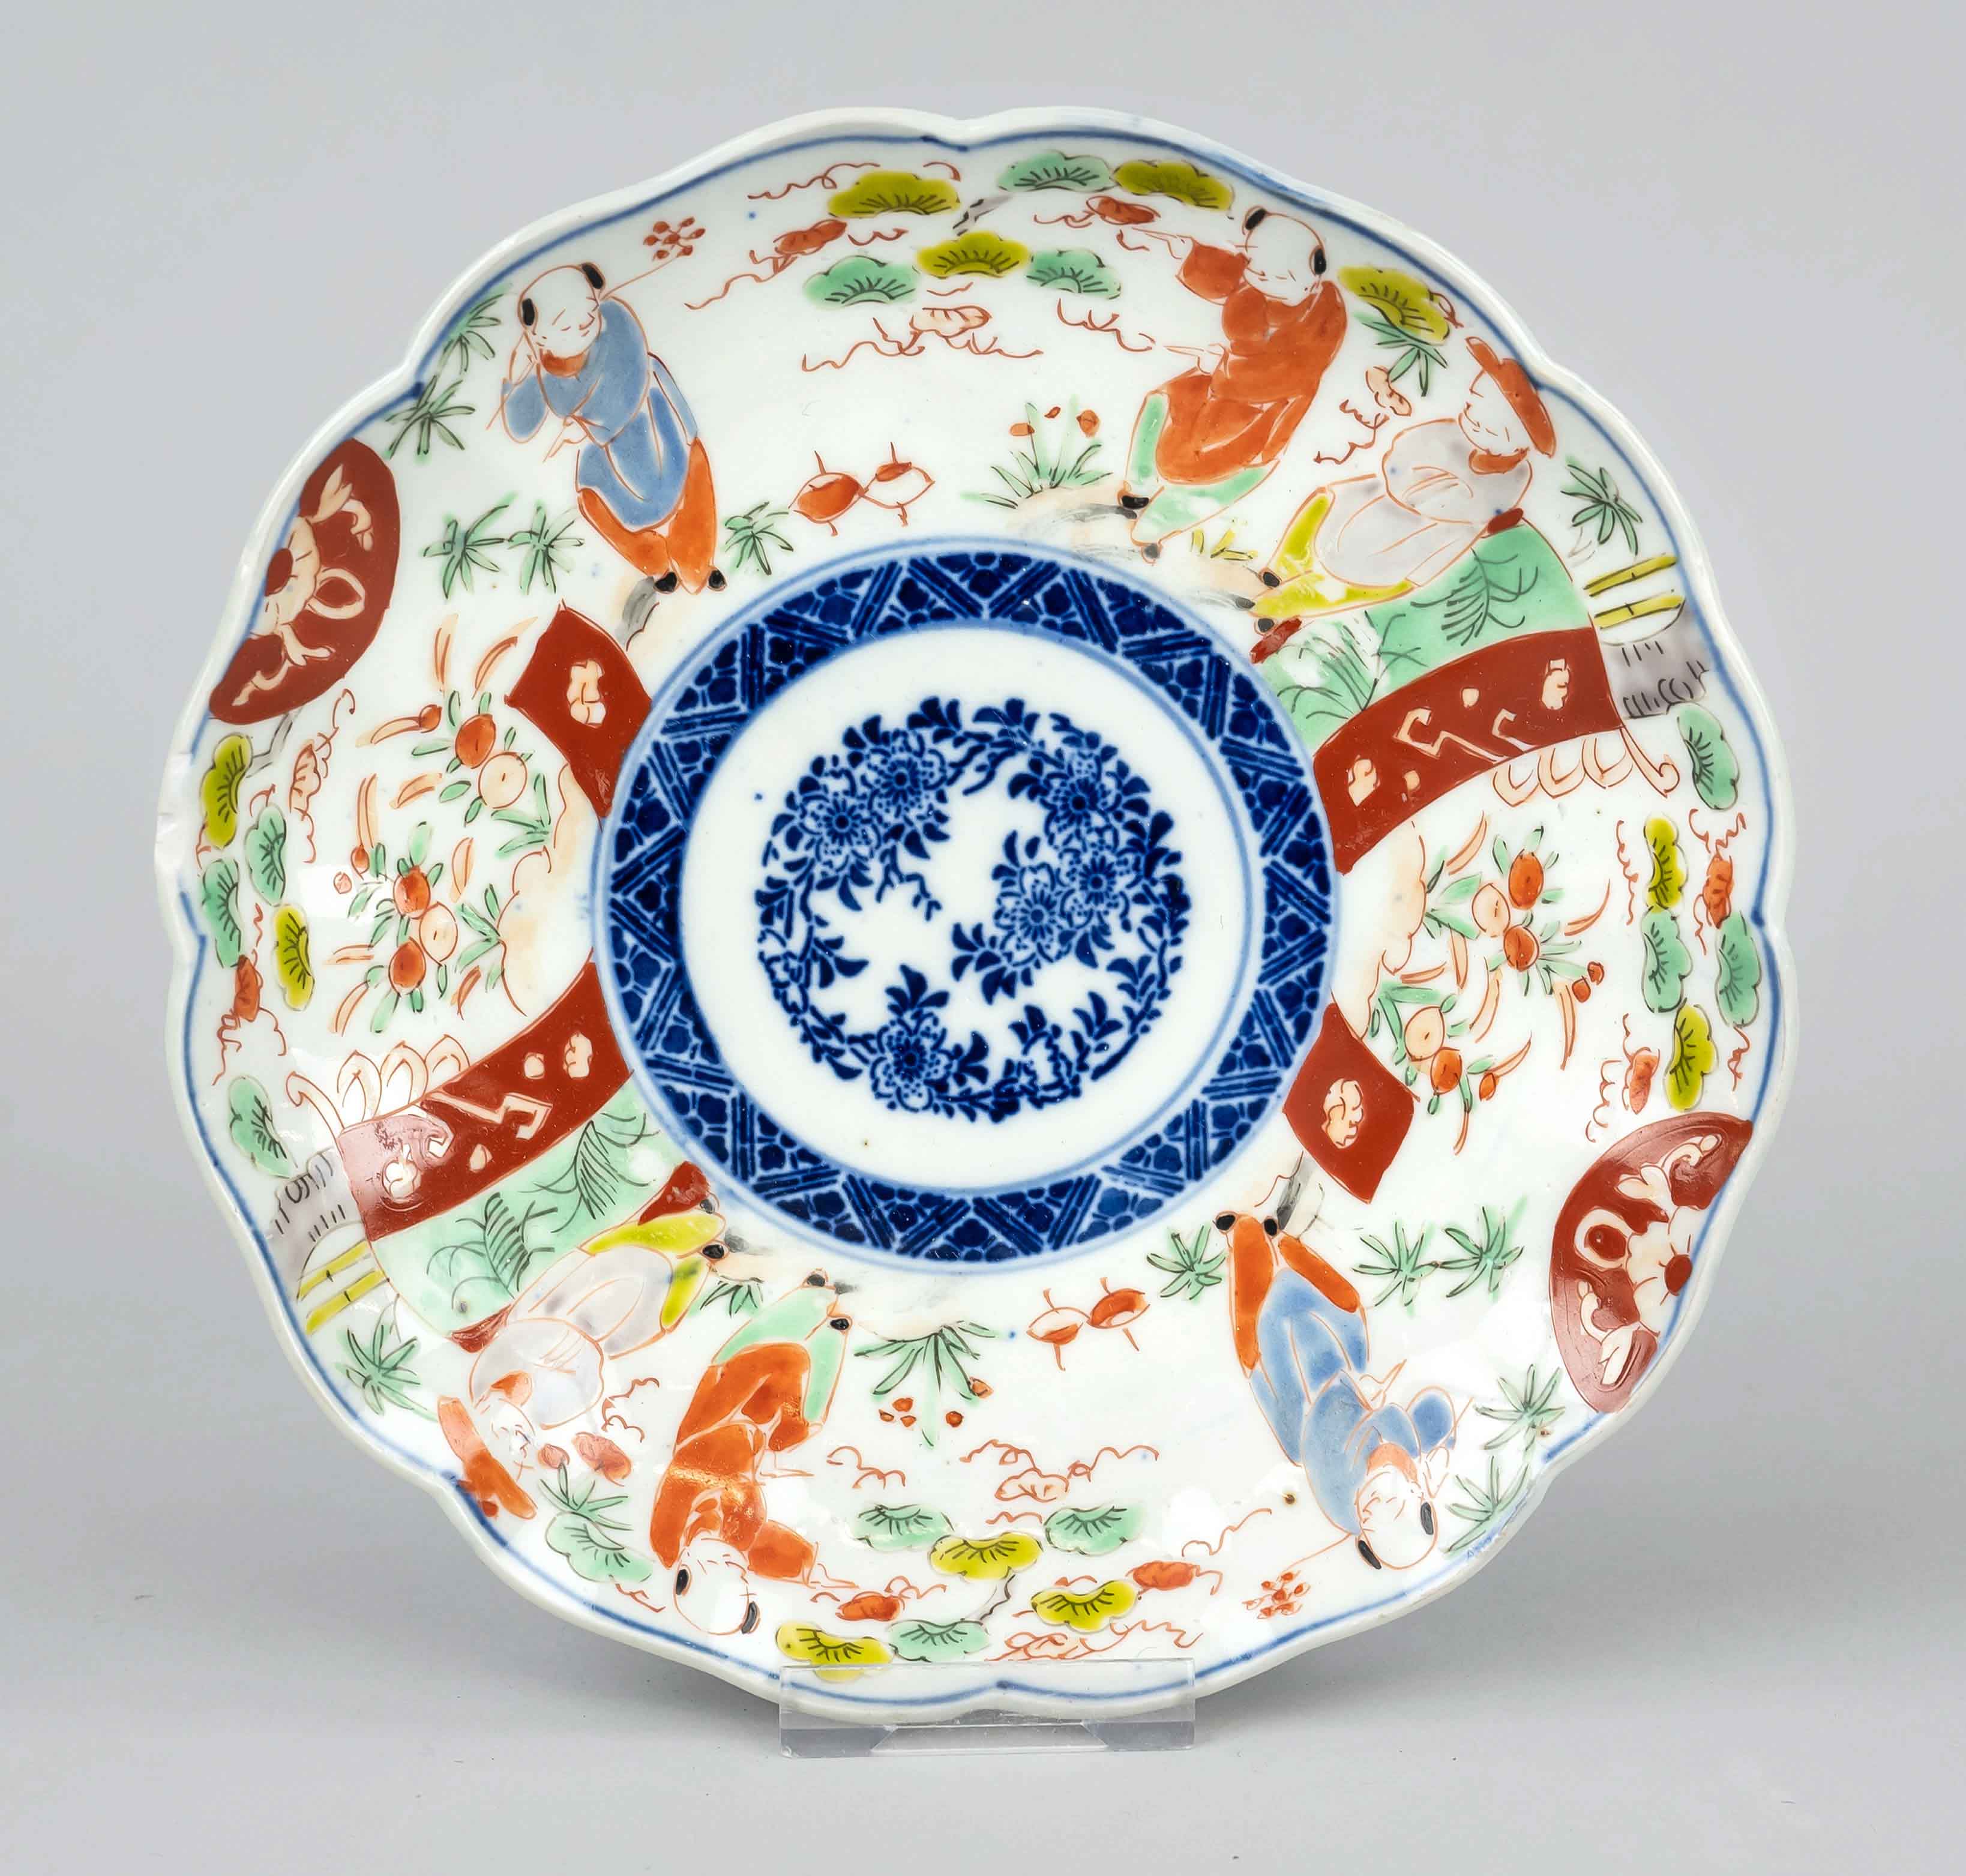 Flower-shaped Imari plate with innovative decorative scheme, Japan, Arita, Edo period(1603-1868),